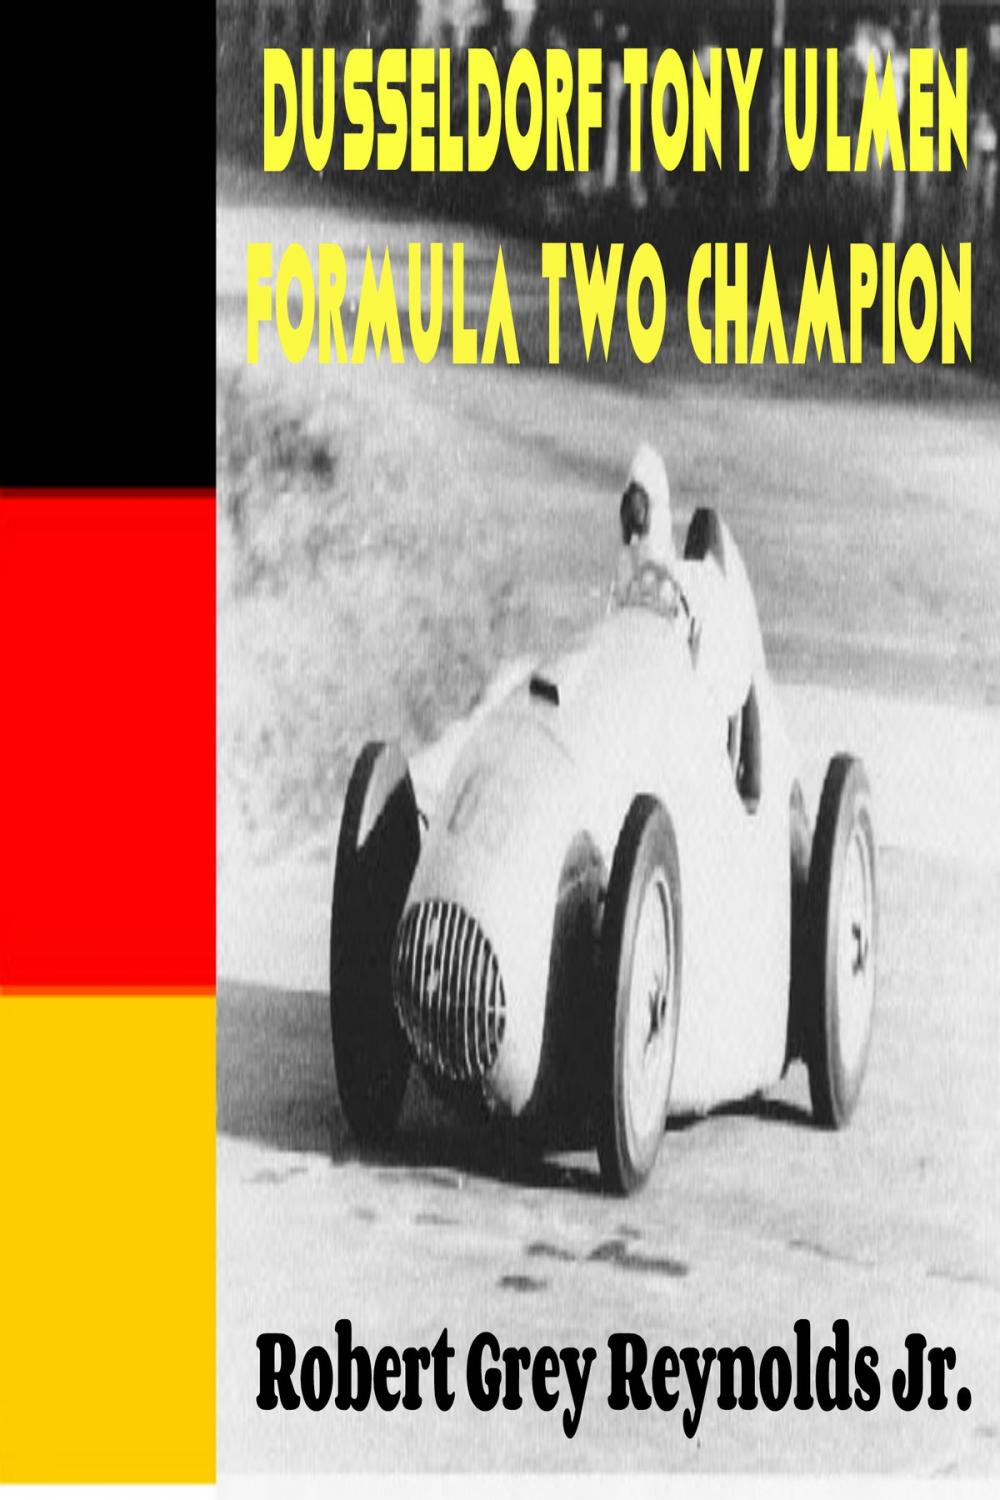 Big bigCover of Dusseldorf Toni Ulmen Formula Two Champion